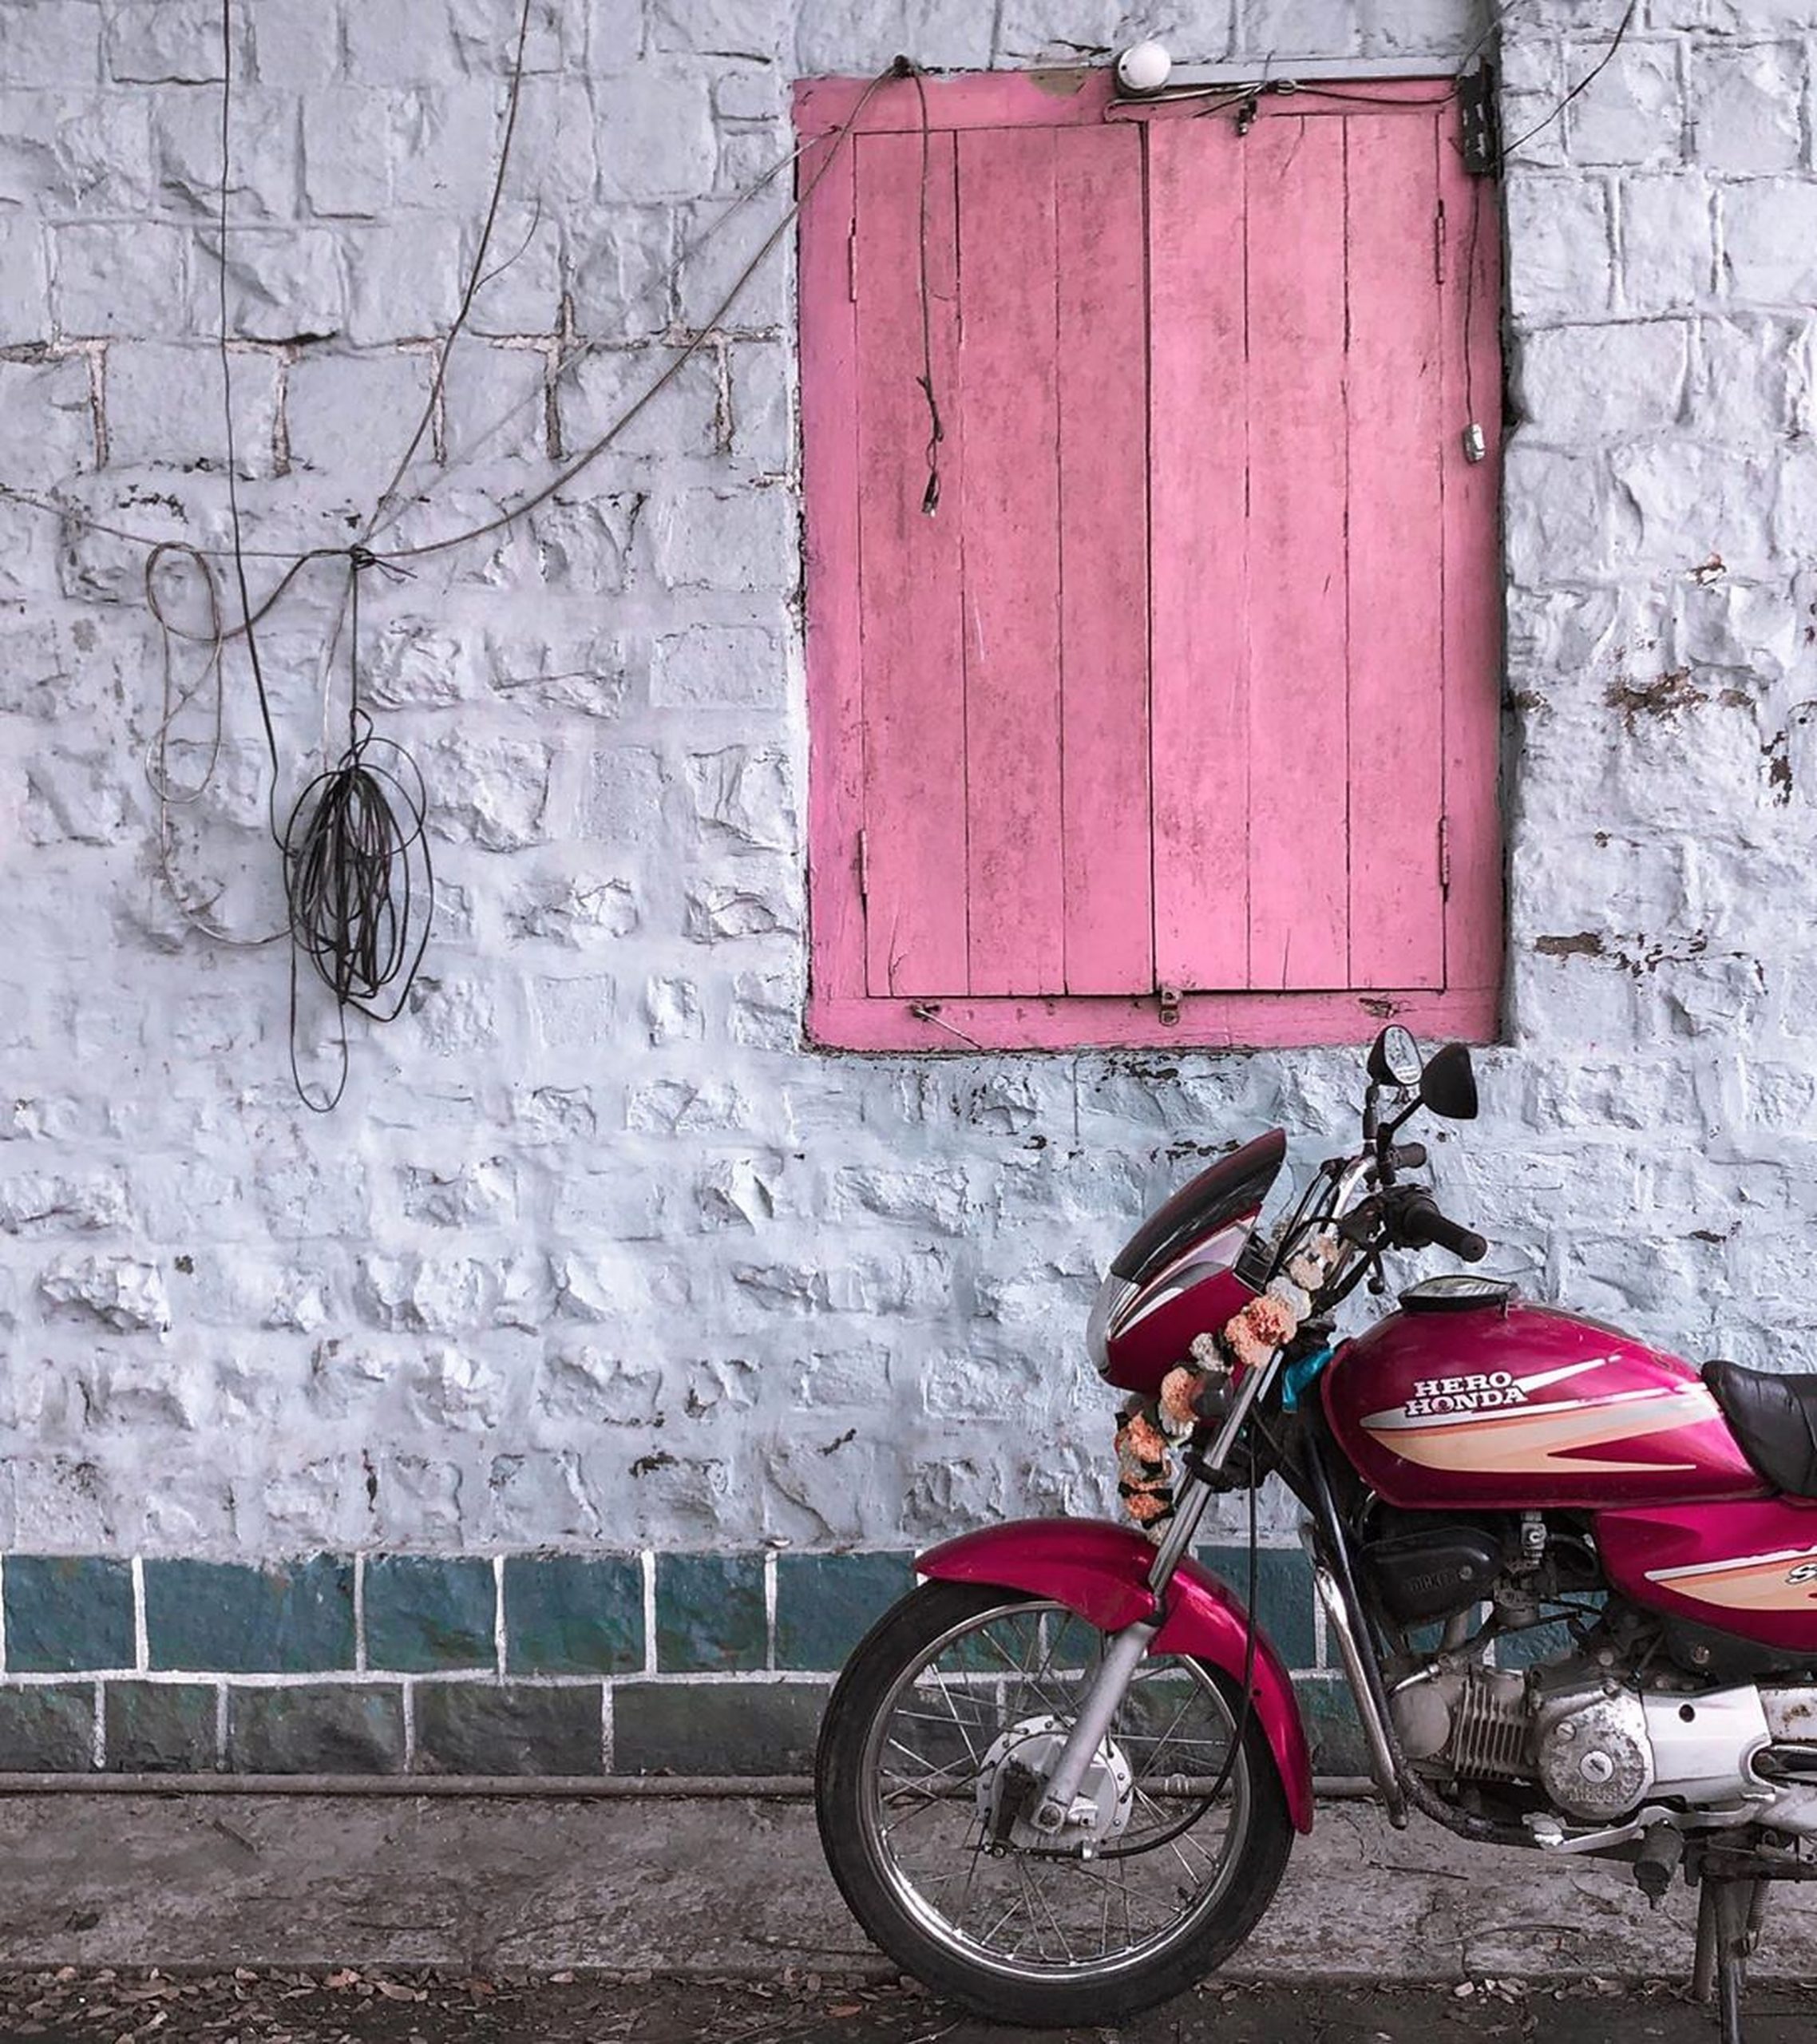 A motorbike near a wall